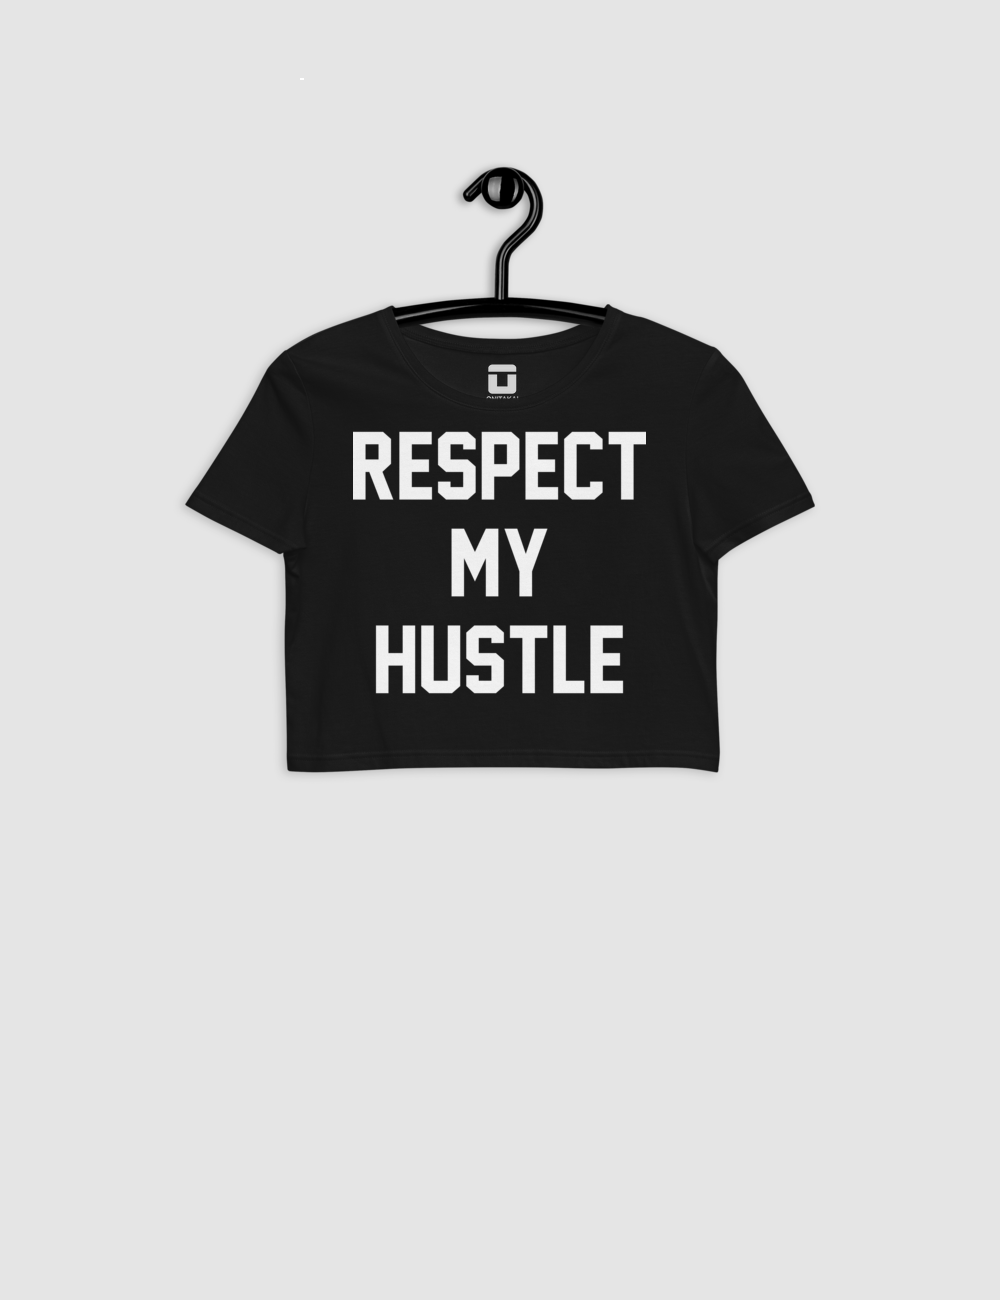 Respect My Hustle Women's Fitted Crop Top T-Shirt OniTakai